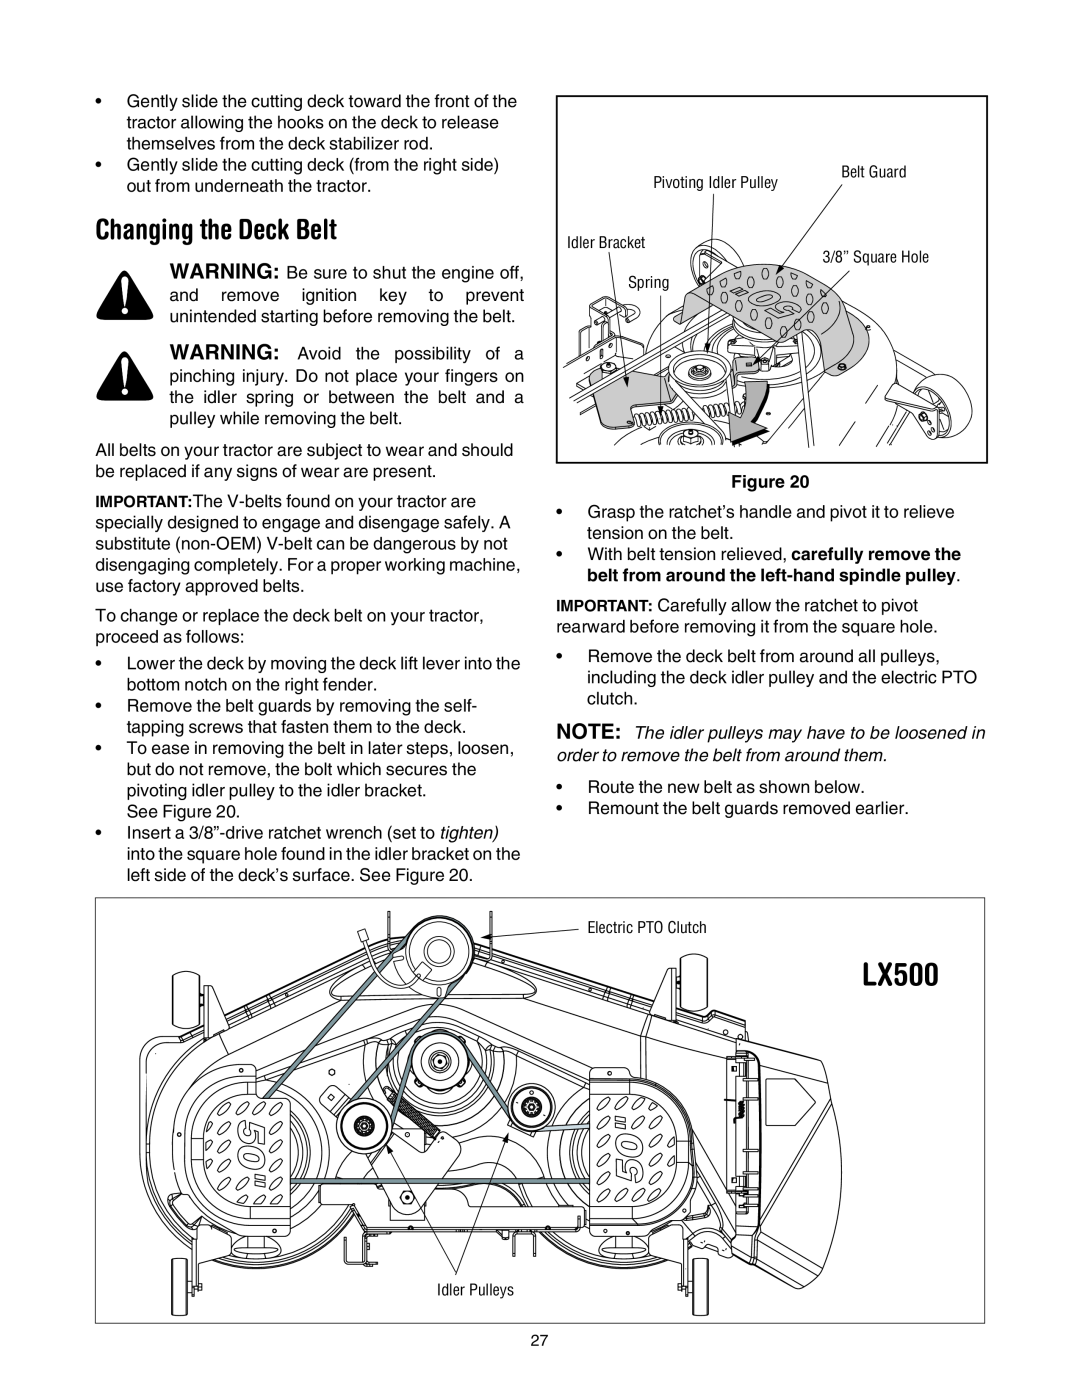 Toro LX500 manual Changing the Deck Belt 